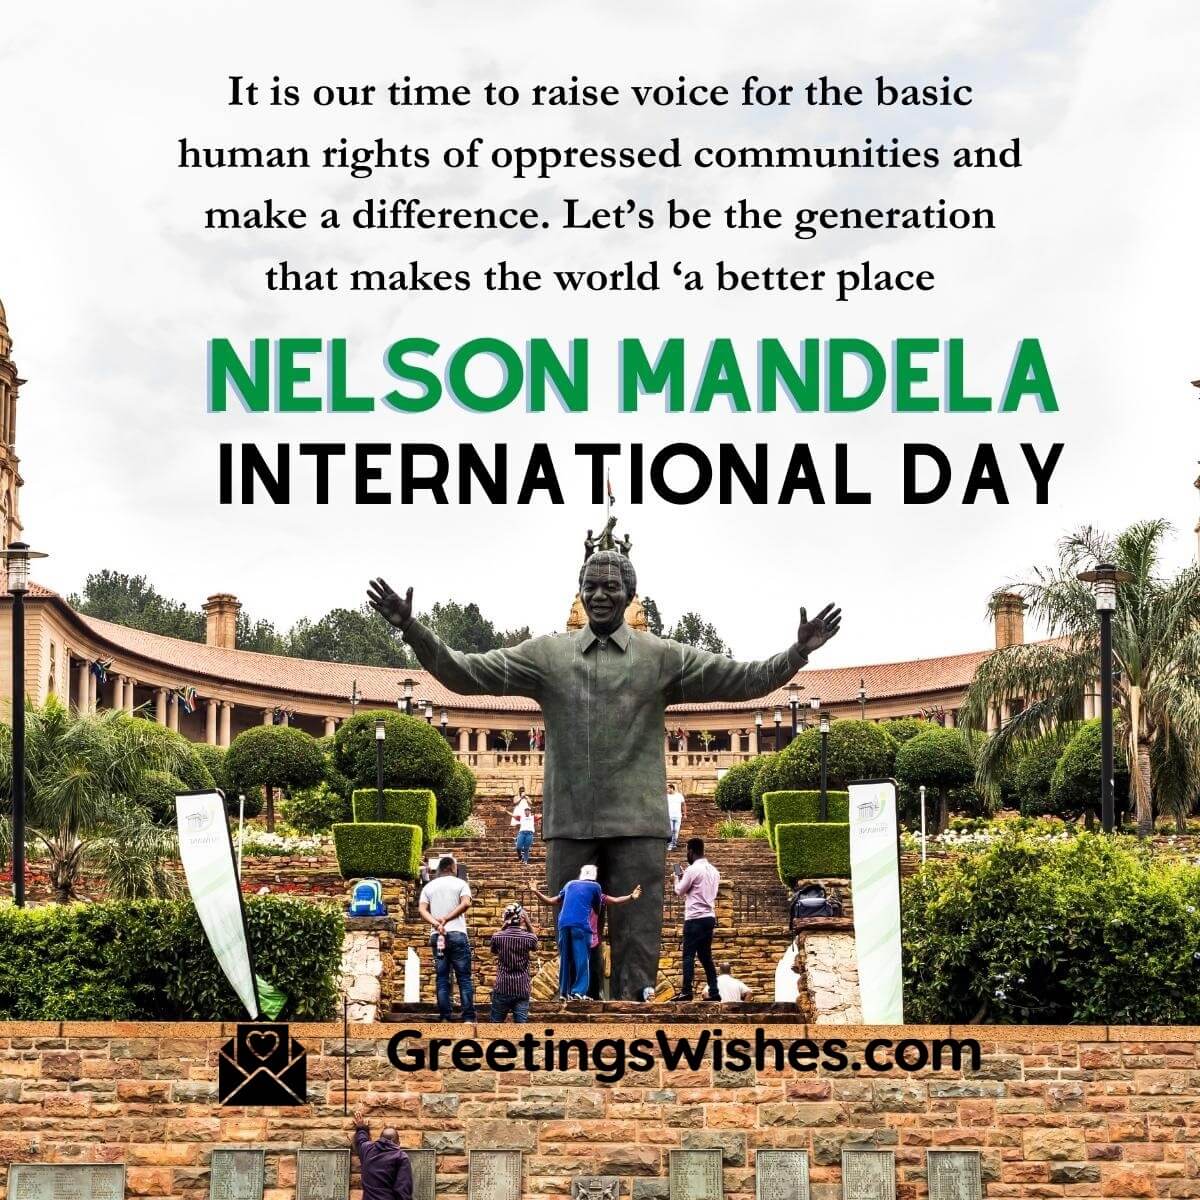 Nelson Mandela International Day Messages